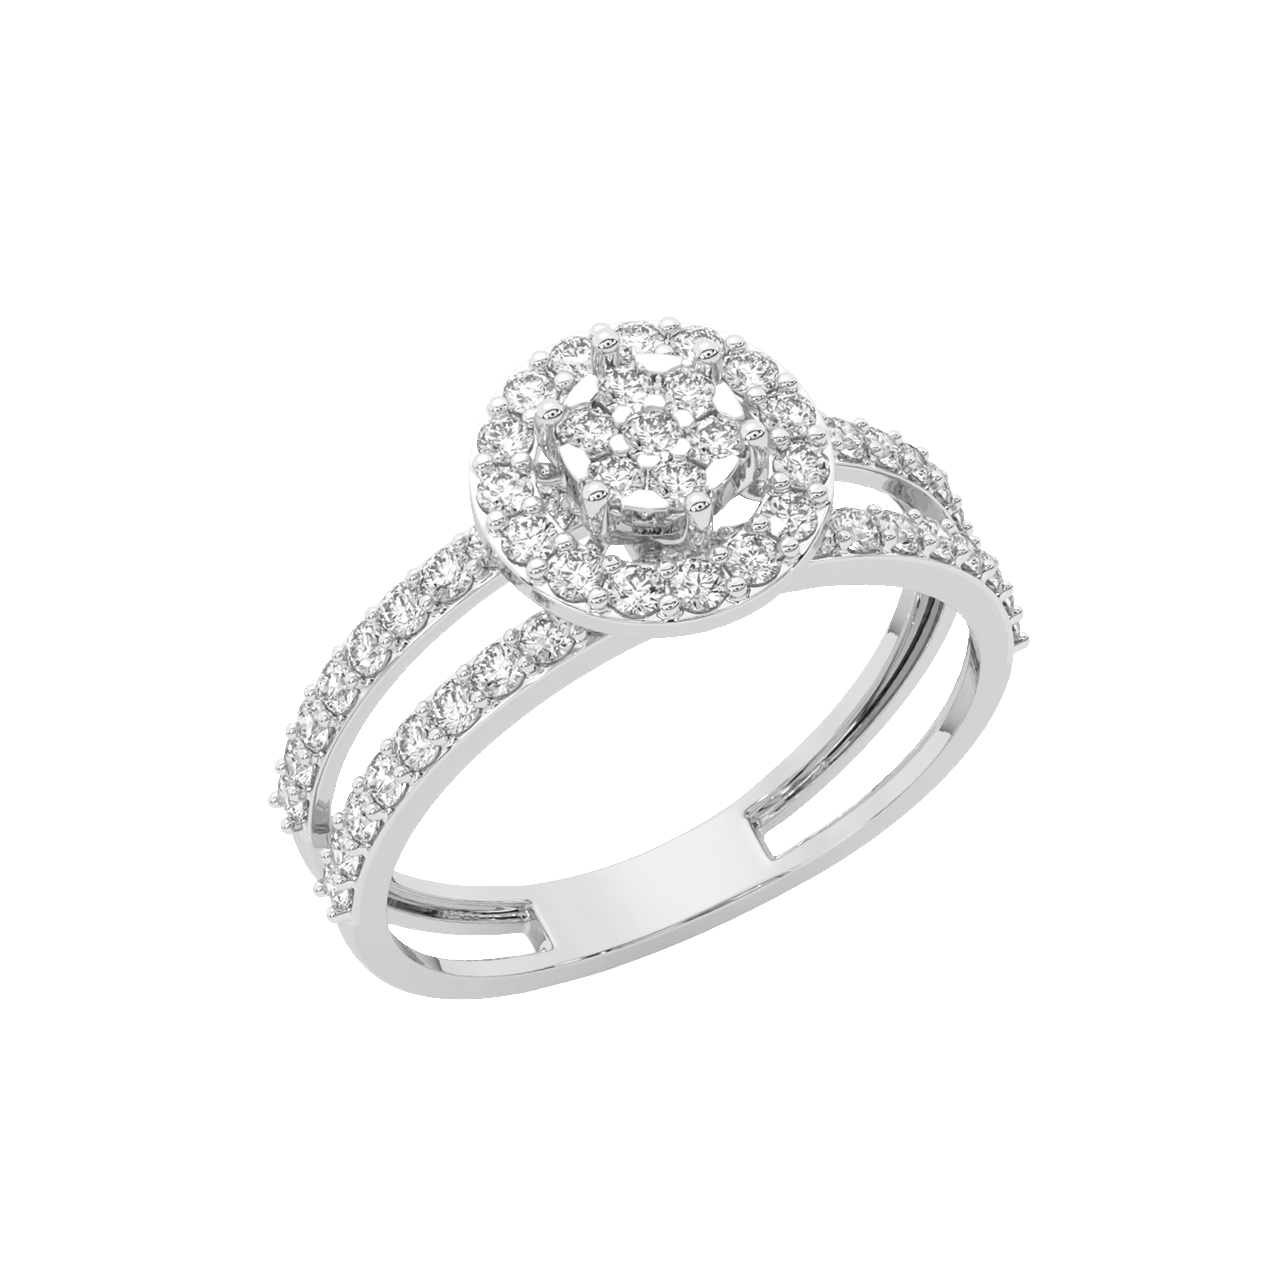 Grover Diamond Engagement Ring